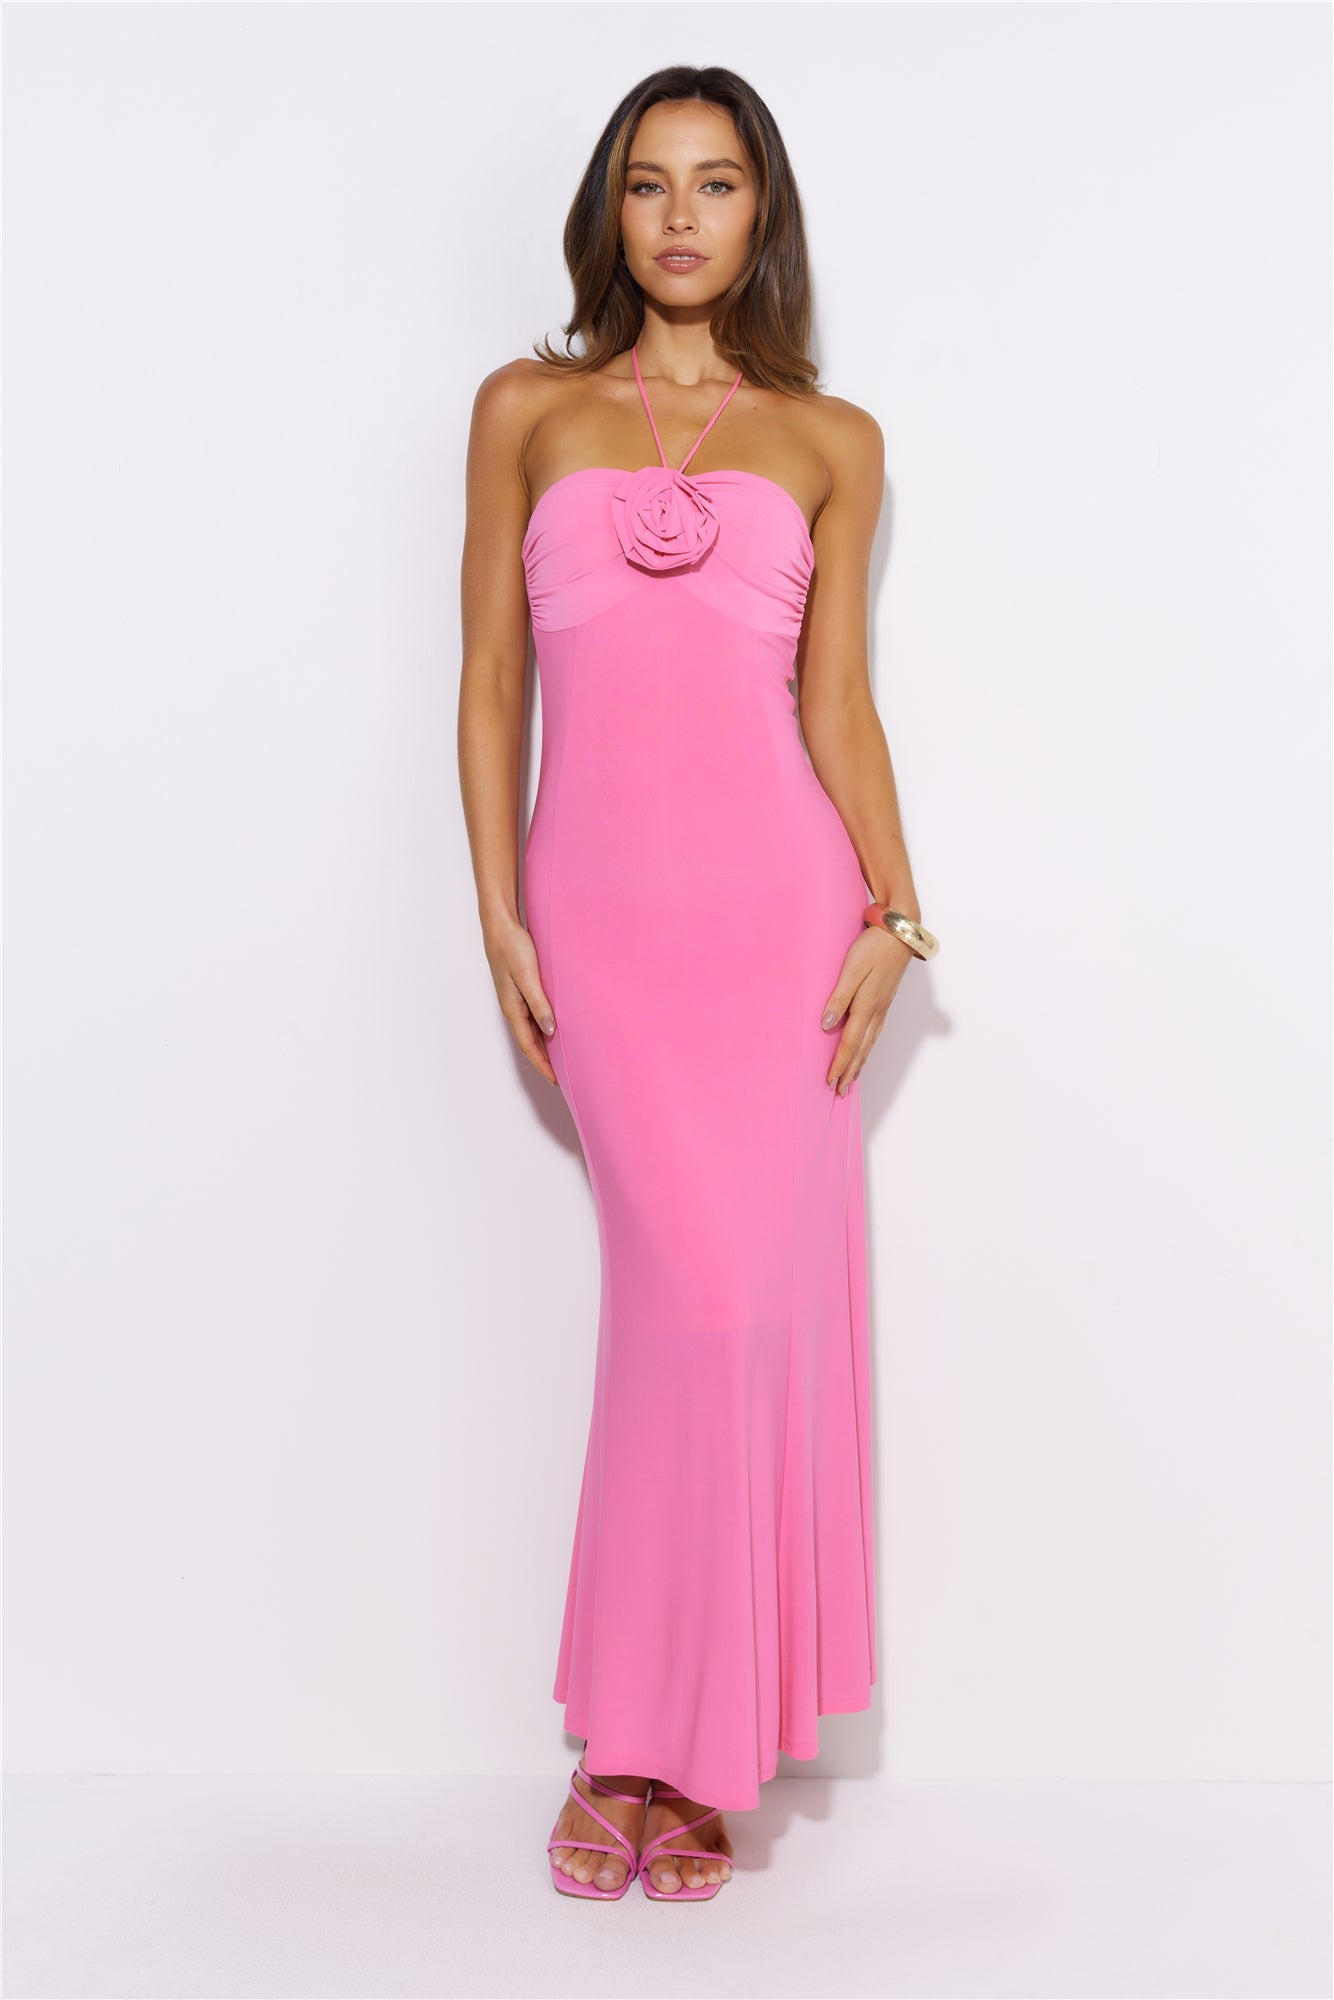 Simply Gorgeous Maxi Dress Pink